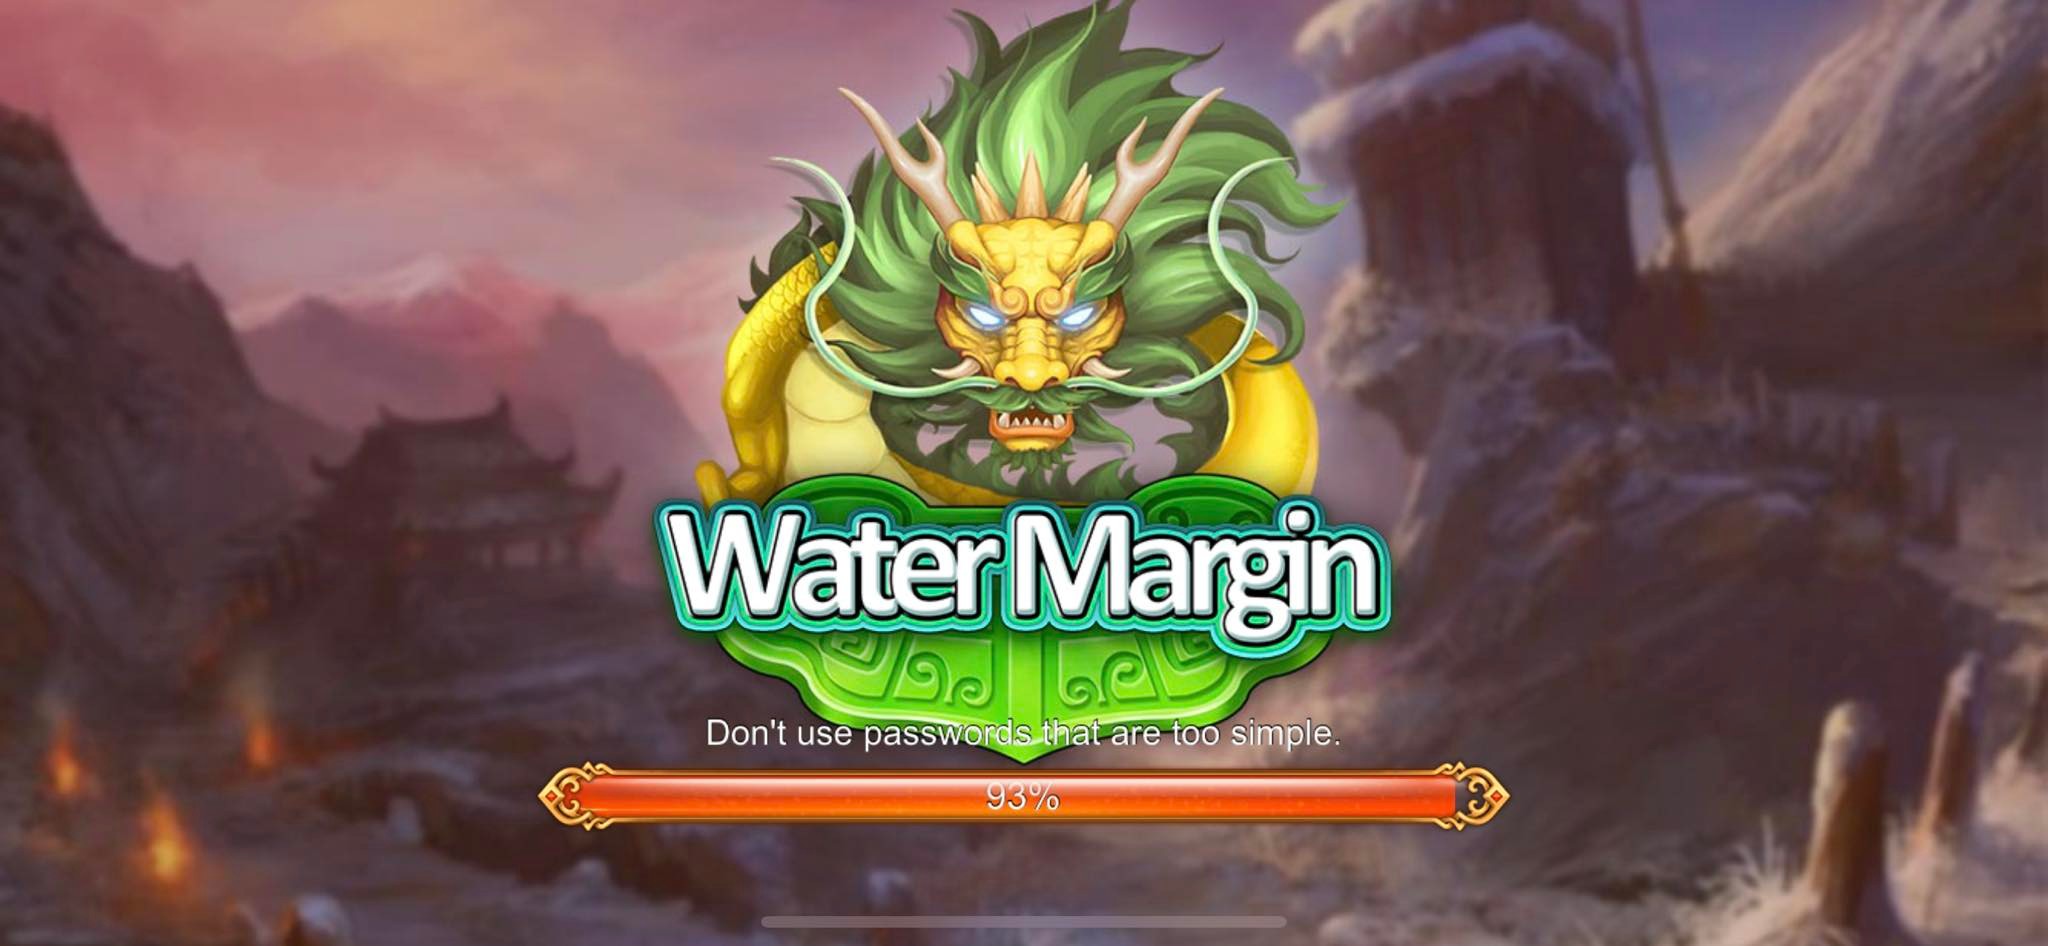 Water Margin gamego88